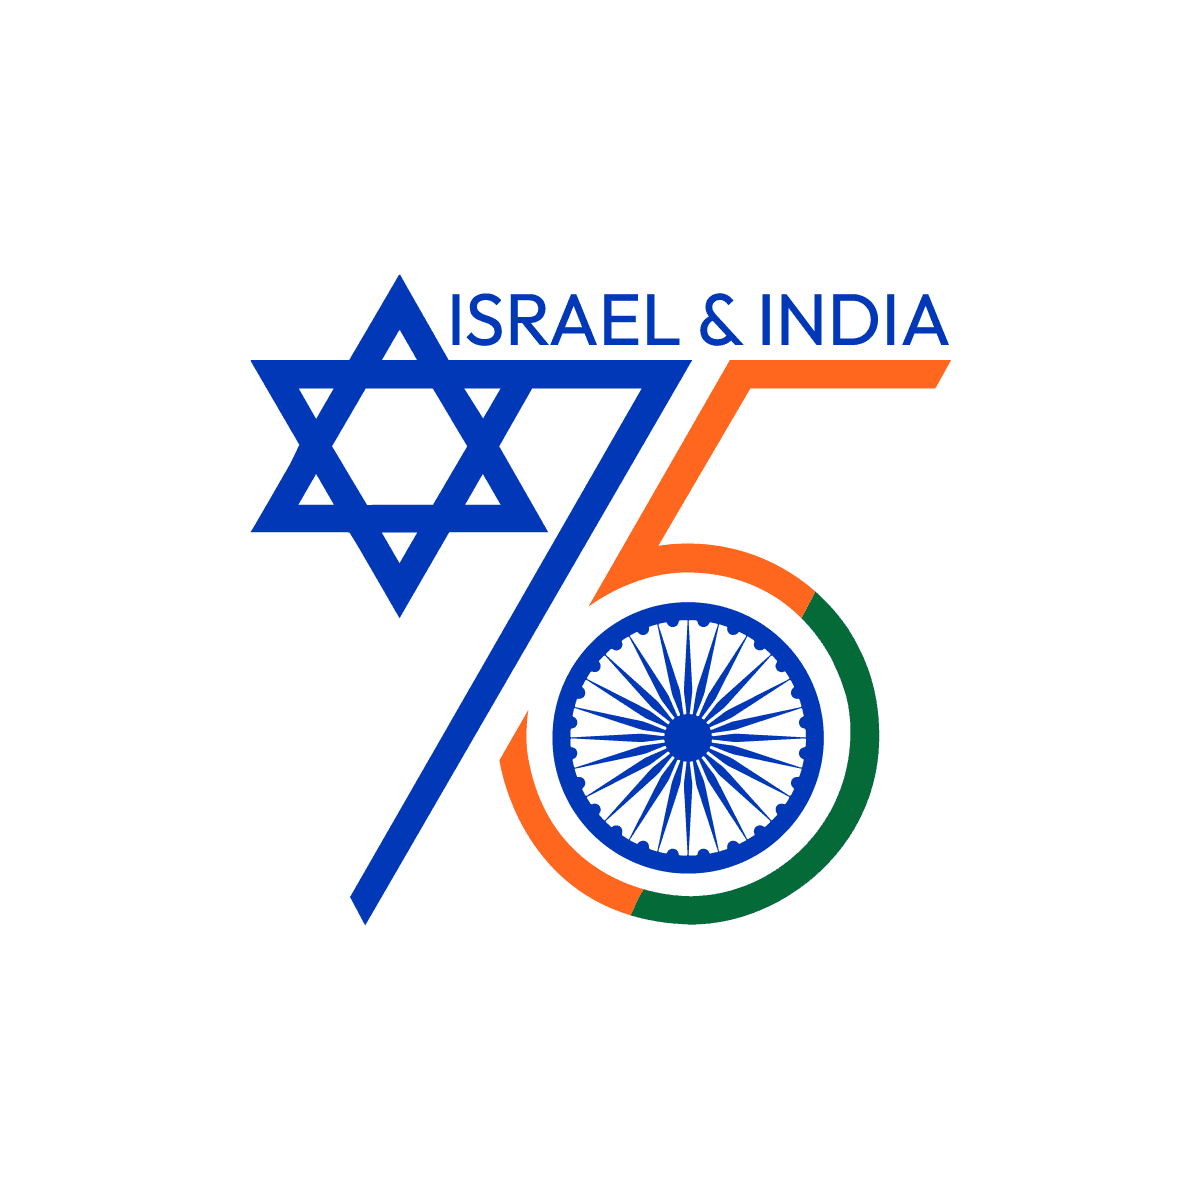 JRC AJC-Israel&India-75 (1).png